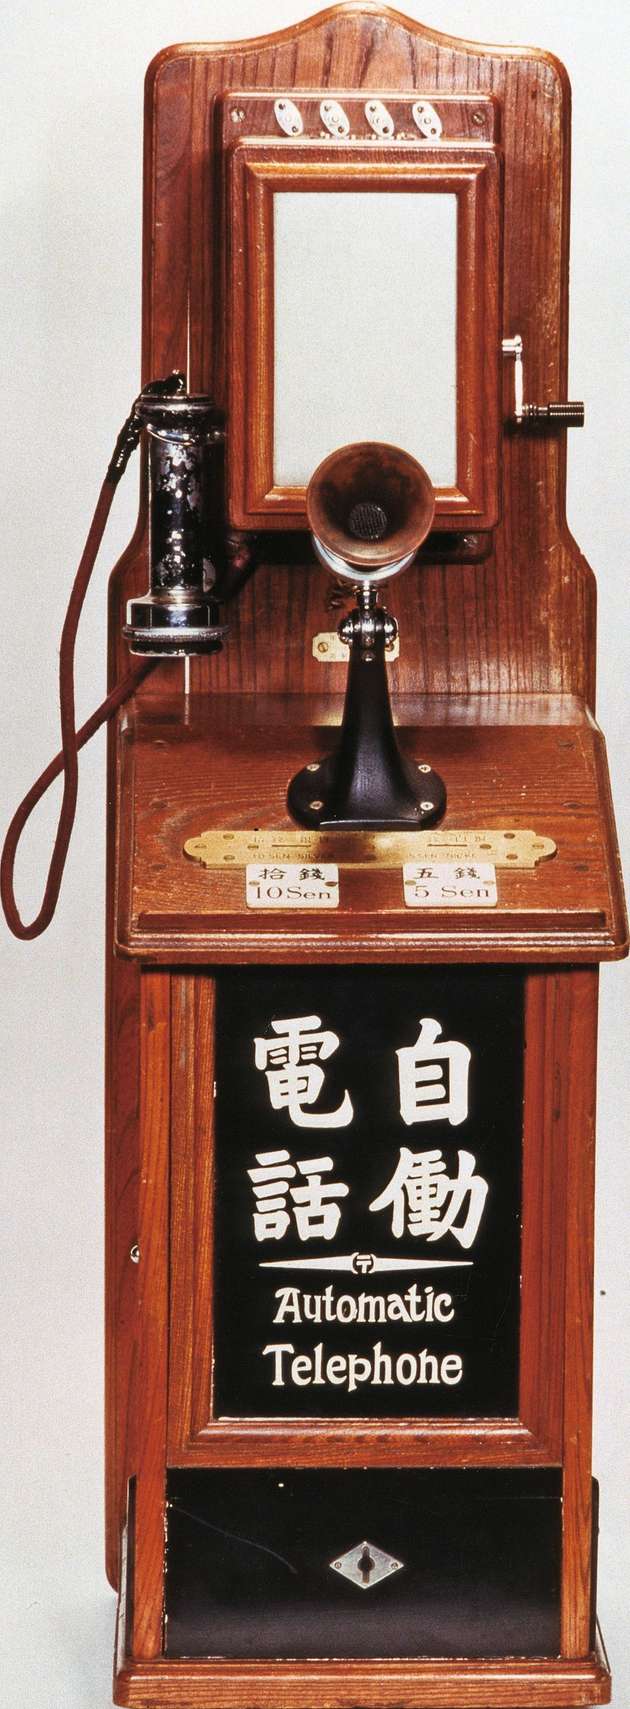 1903 - Bau des ersten Common-Battery-Telefons